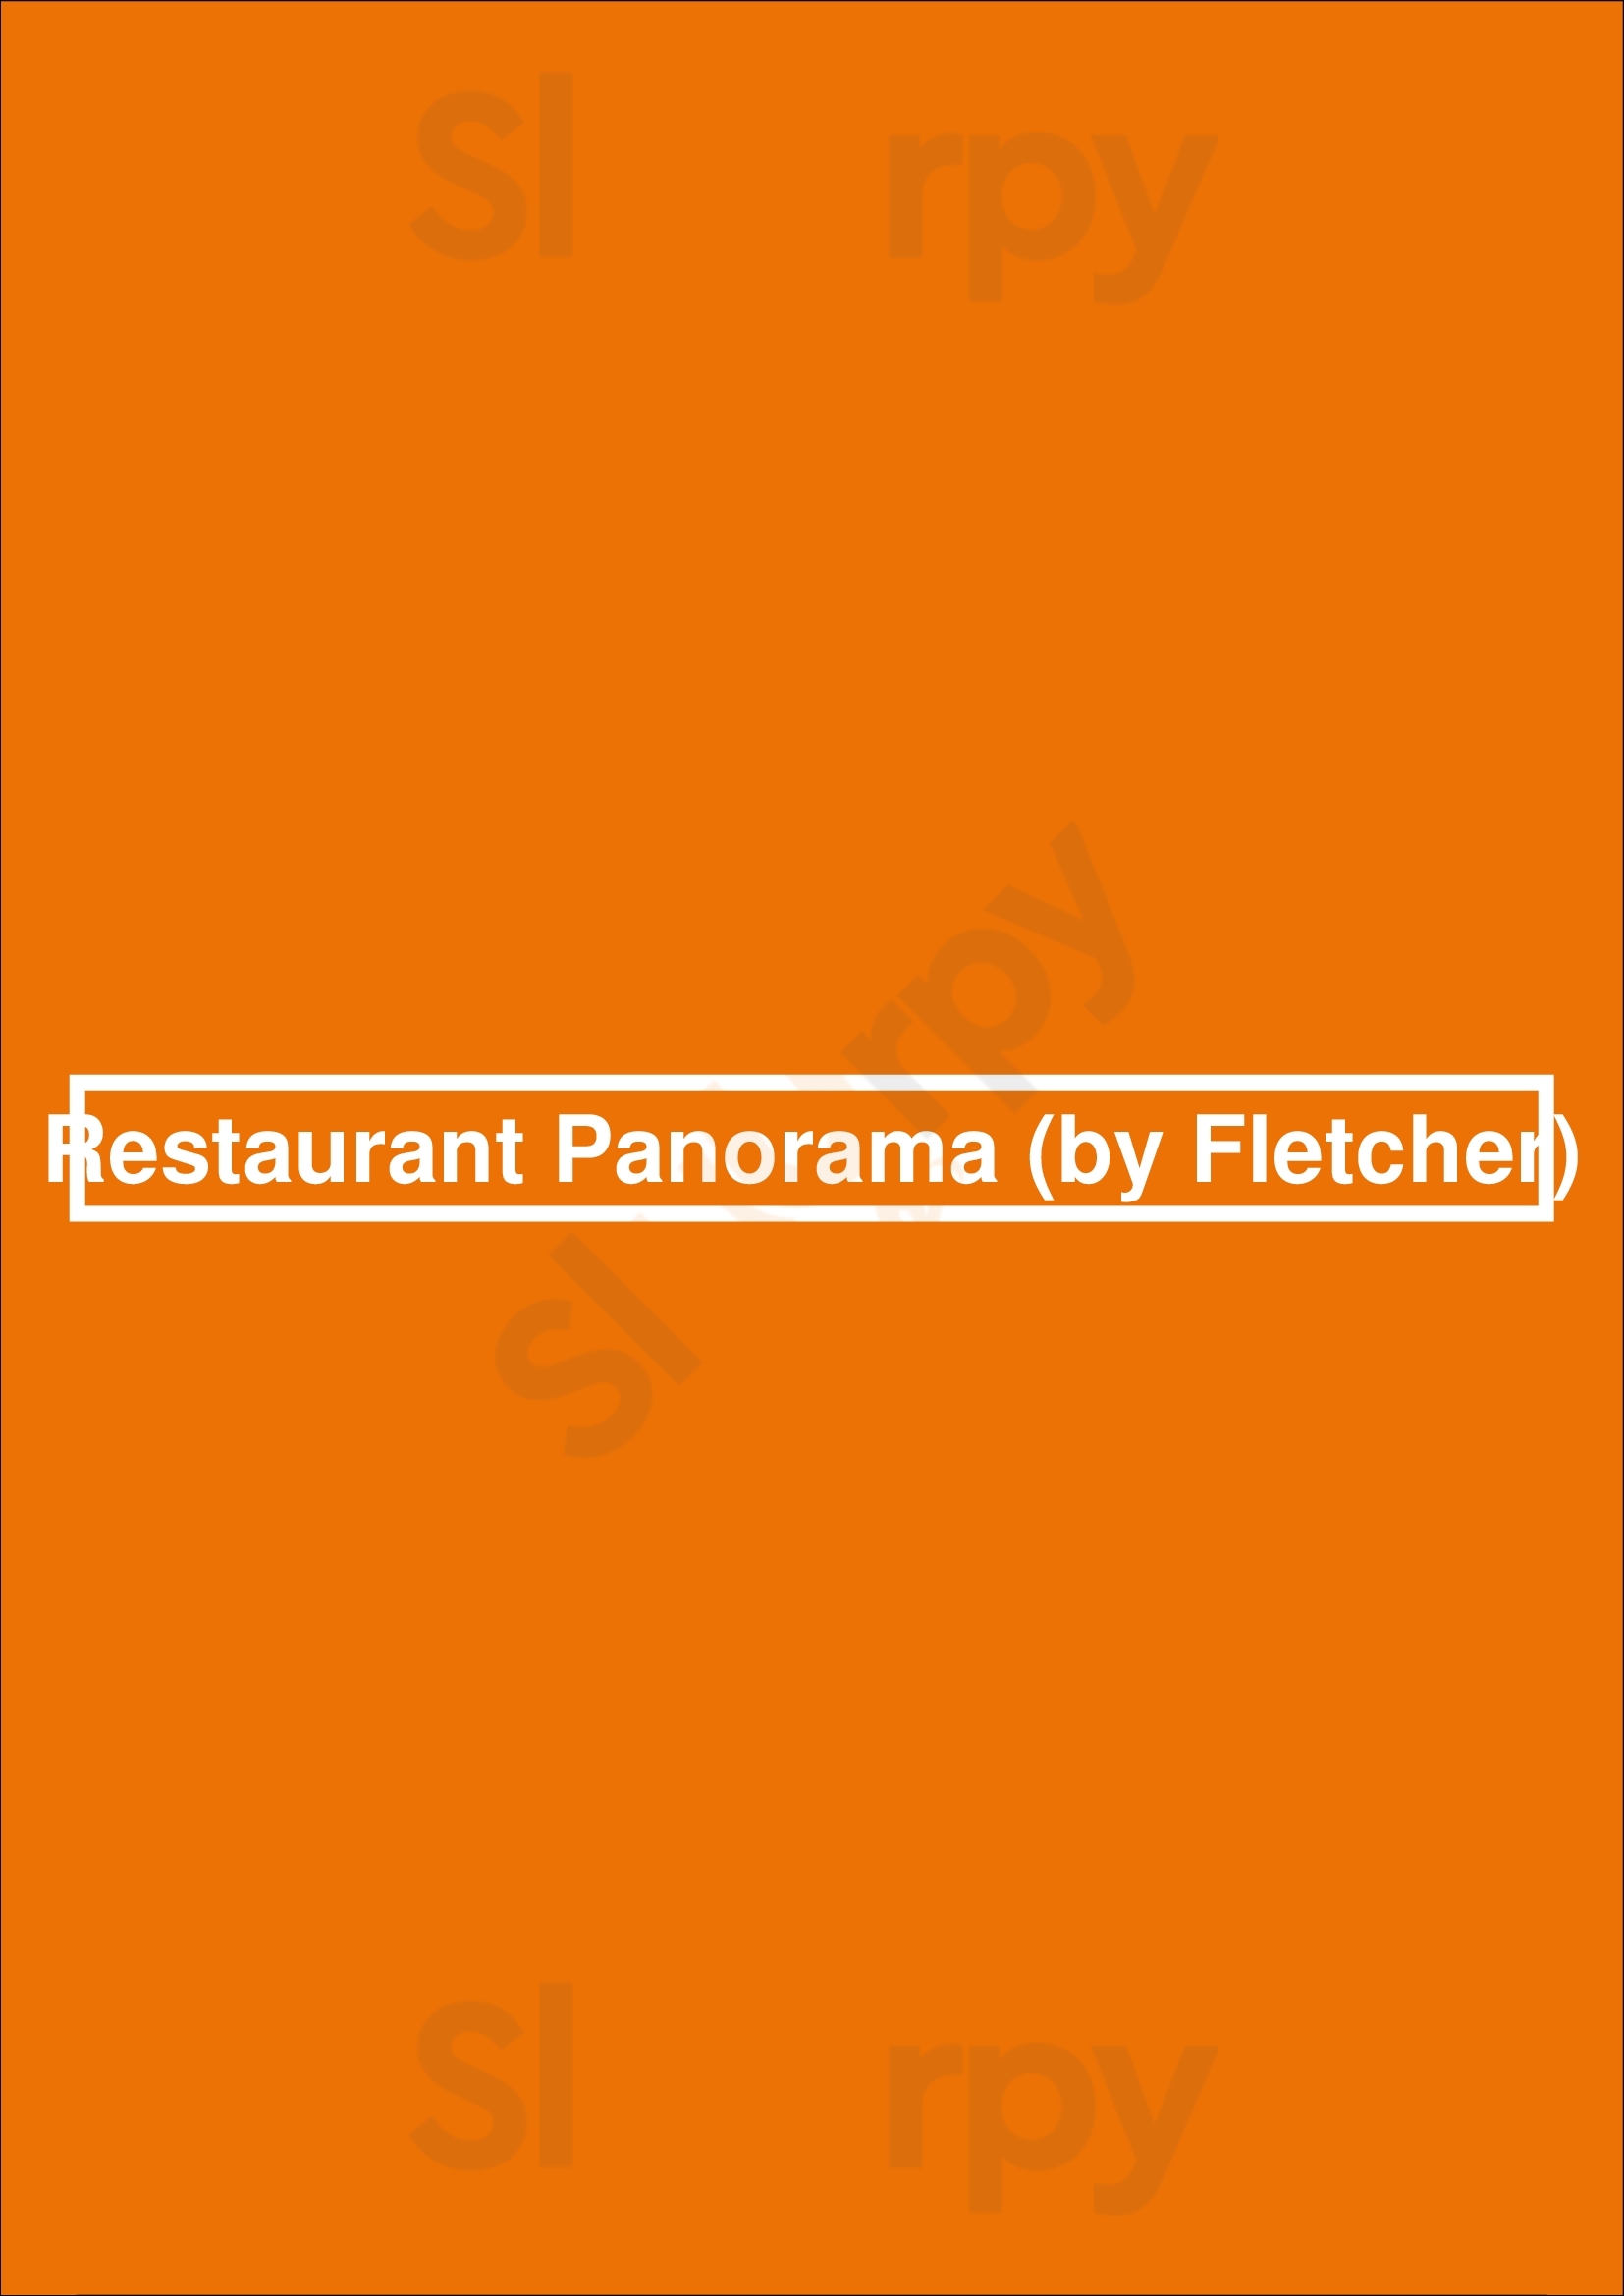 Restaurant Panorama (by Fletcher) Berg en Dal Menu - 1